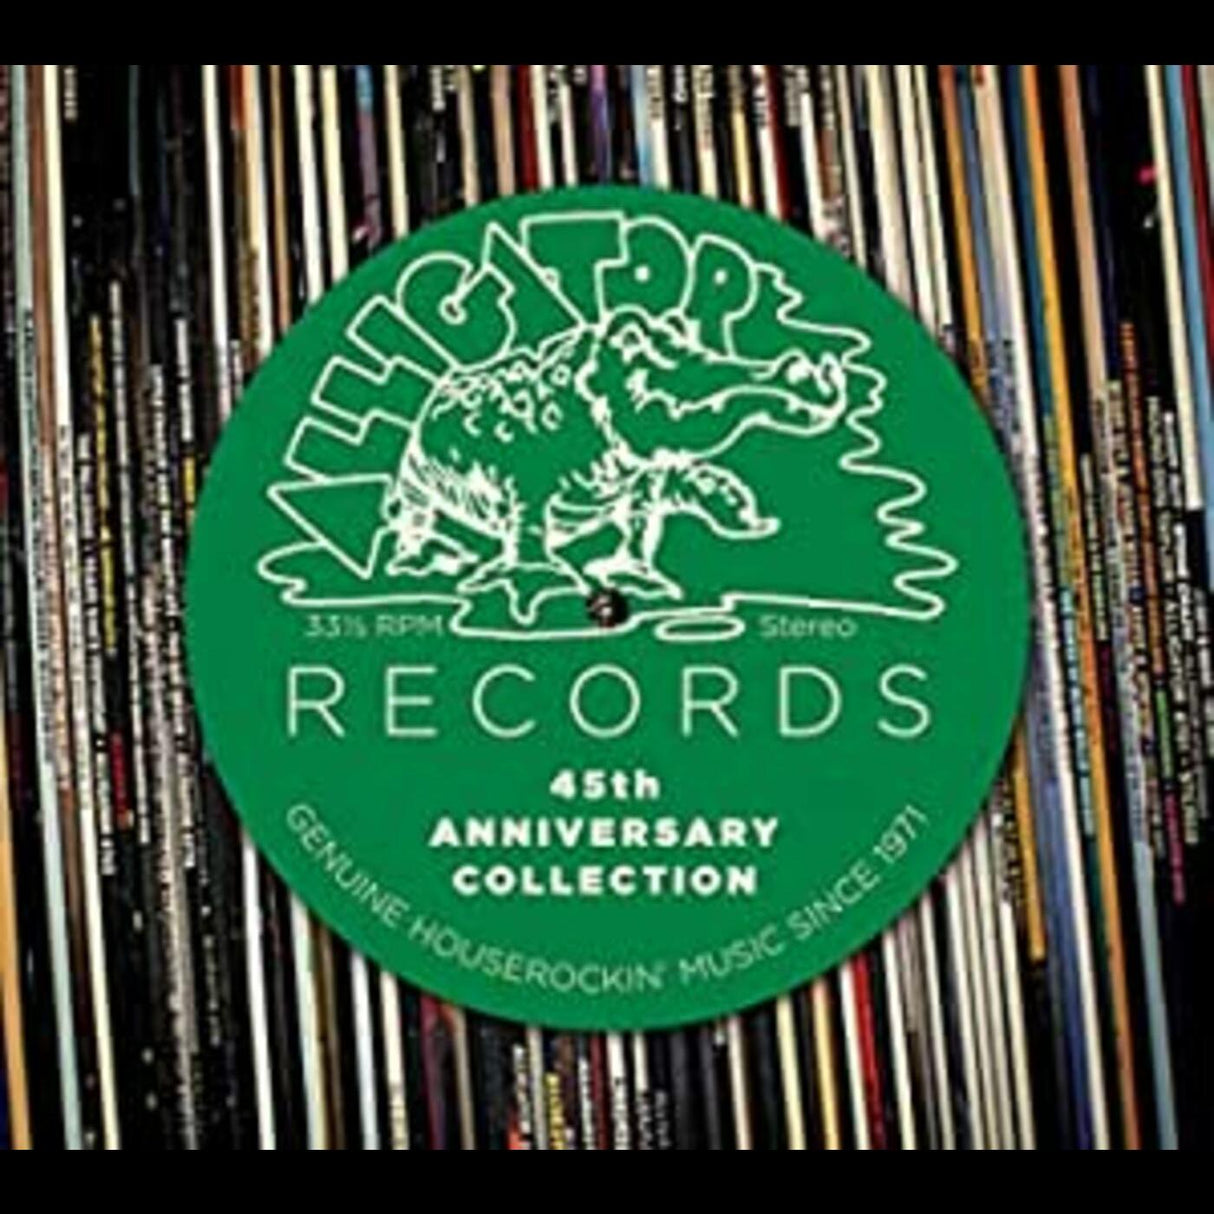 Alligator Records 45th Anniversary Collection [CD]